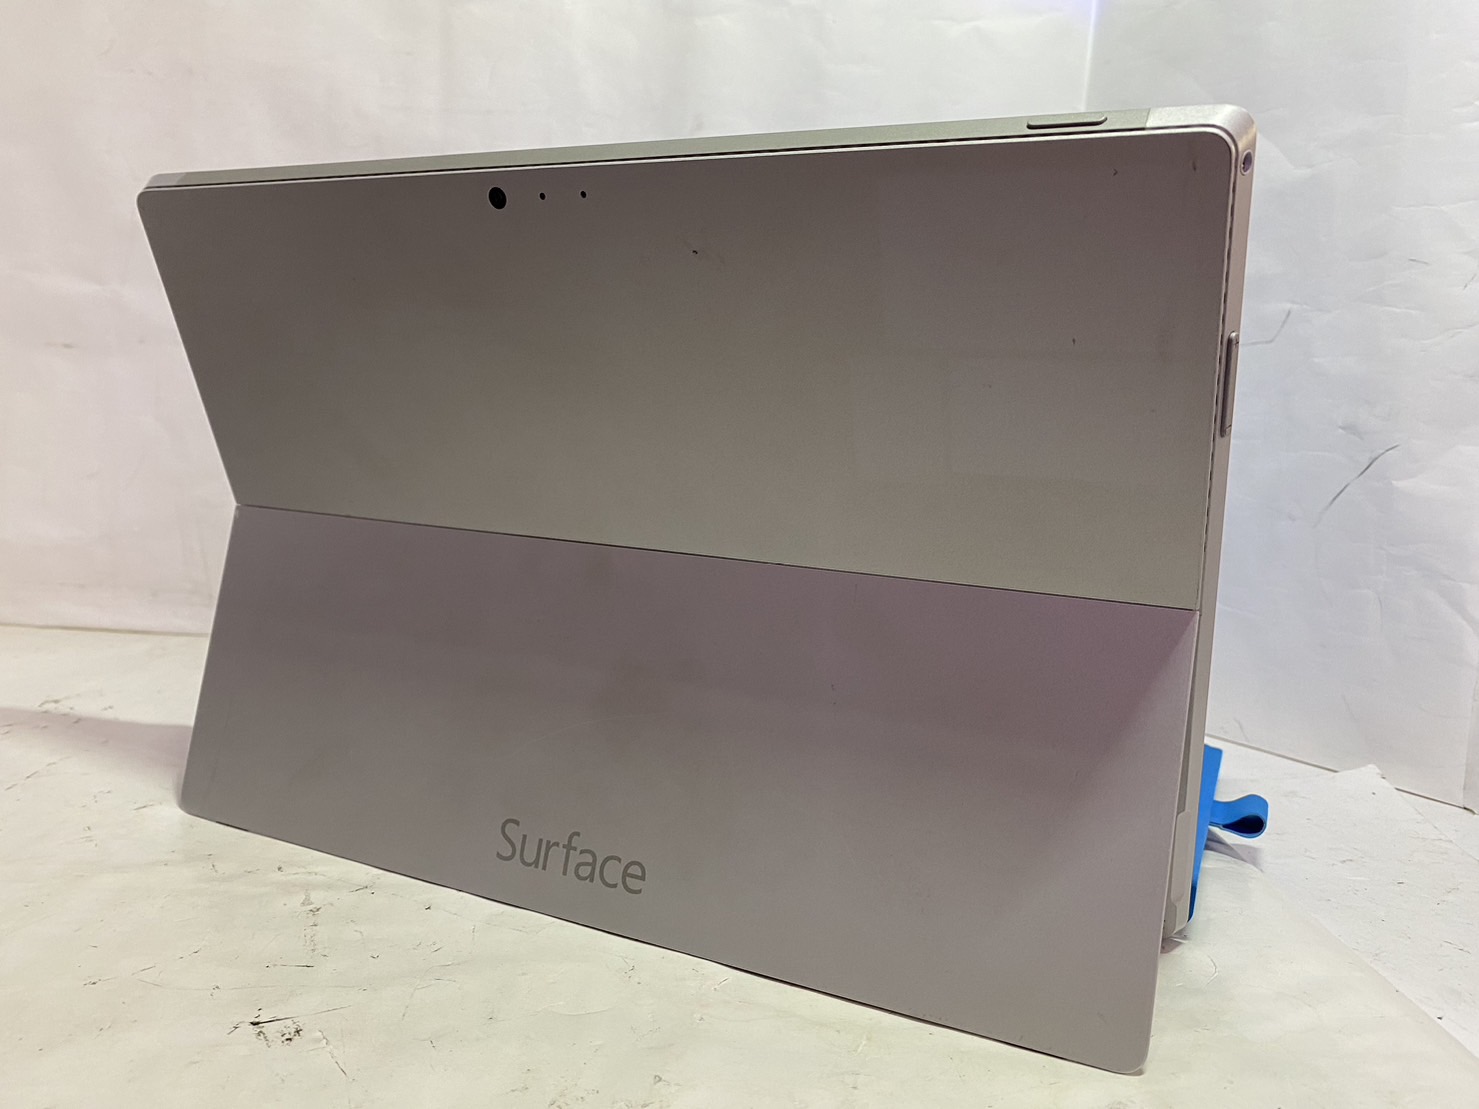 Microsoft(マイクロソフト) Surface Pro 3 1631の激安通販(詳細情報